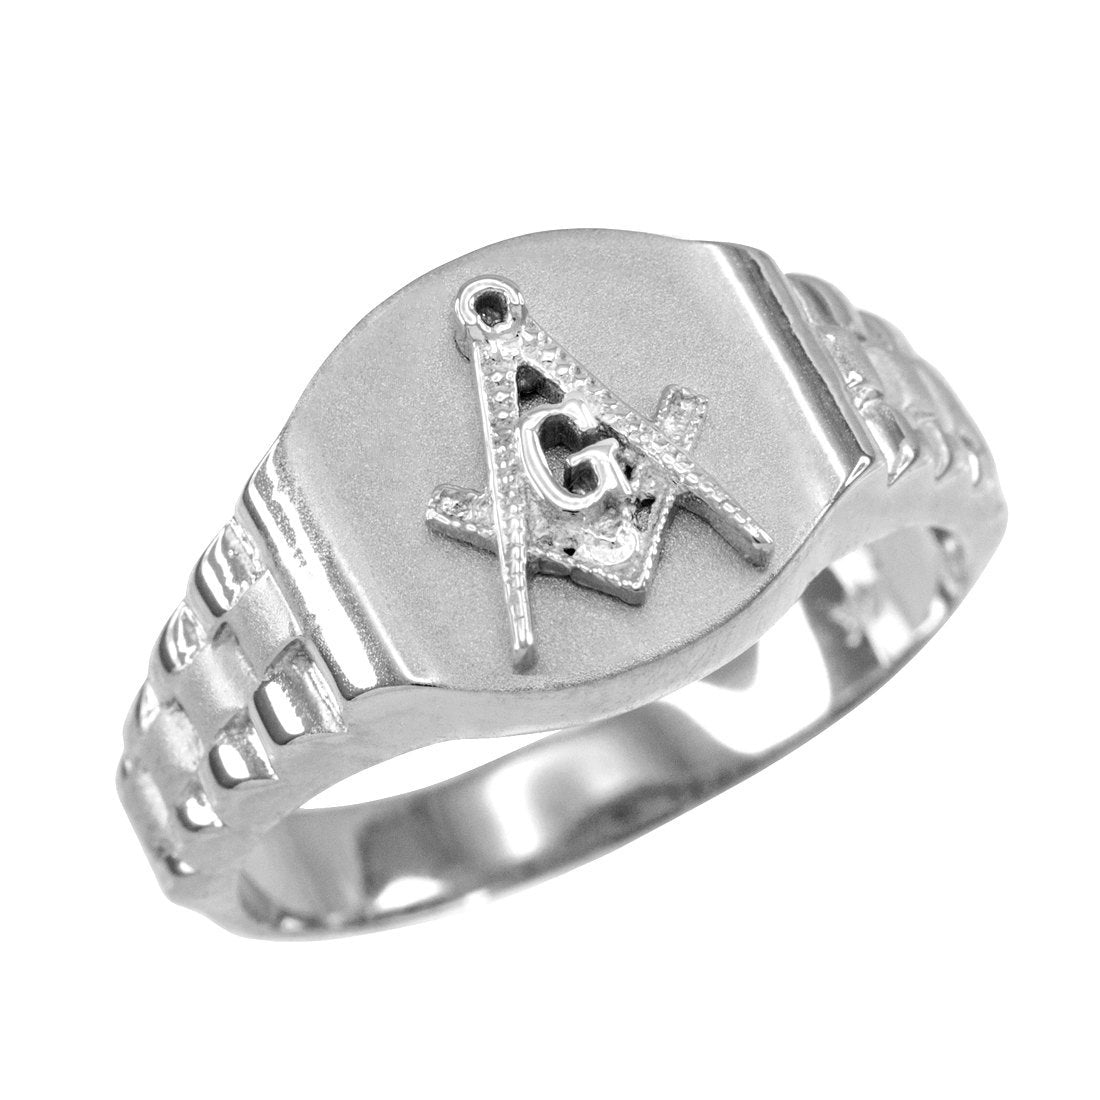 Sterling Silver rolex style Round Masonic Ring - Mens Silver Masonic Ring Karma Blingz